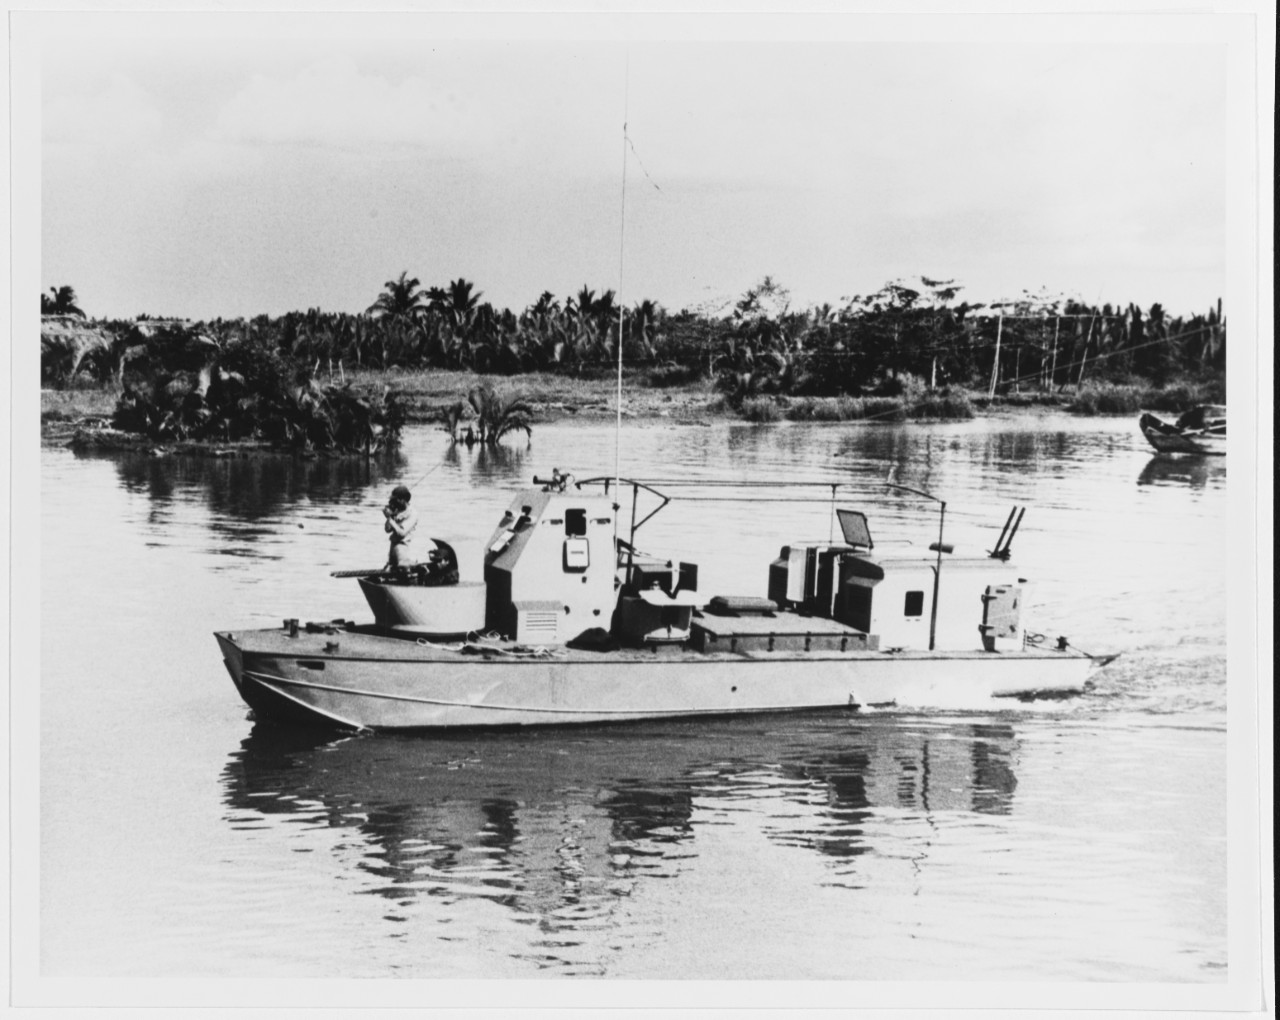 South Vietnamese river patrol craft